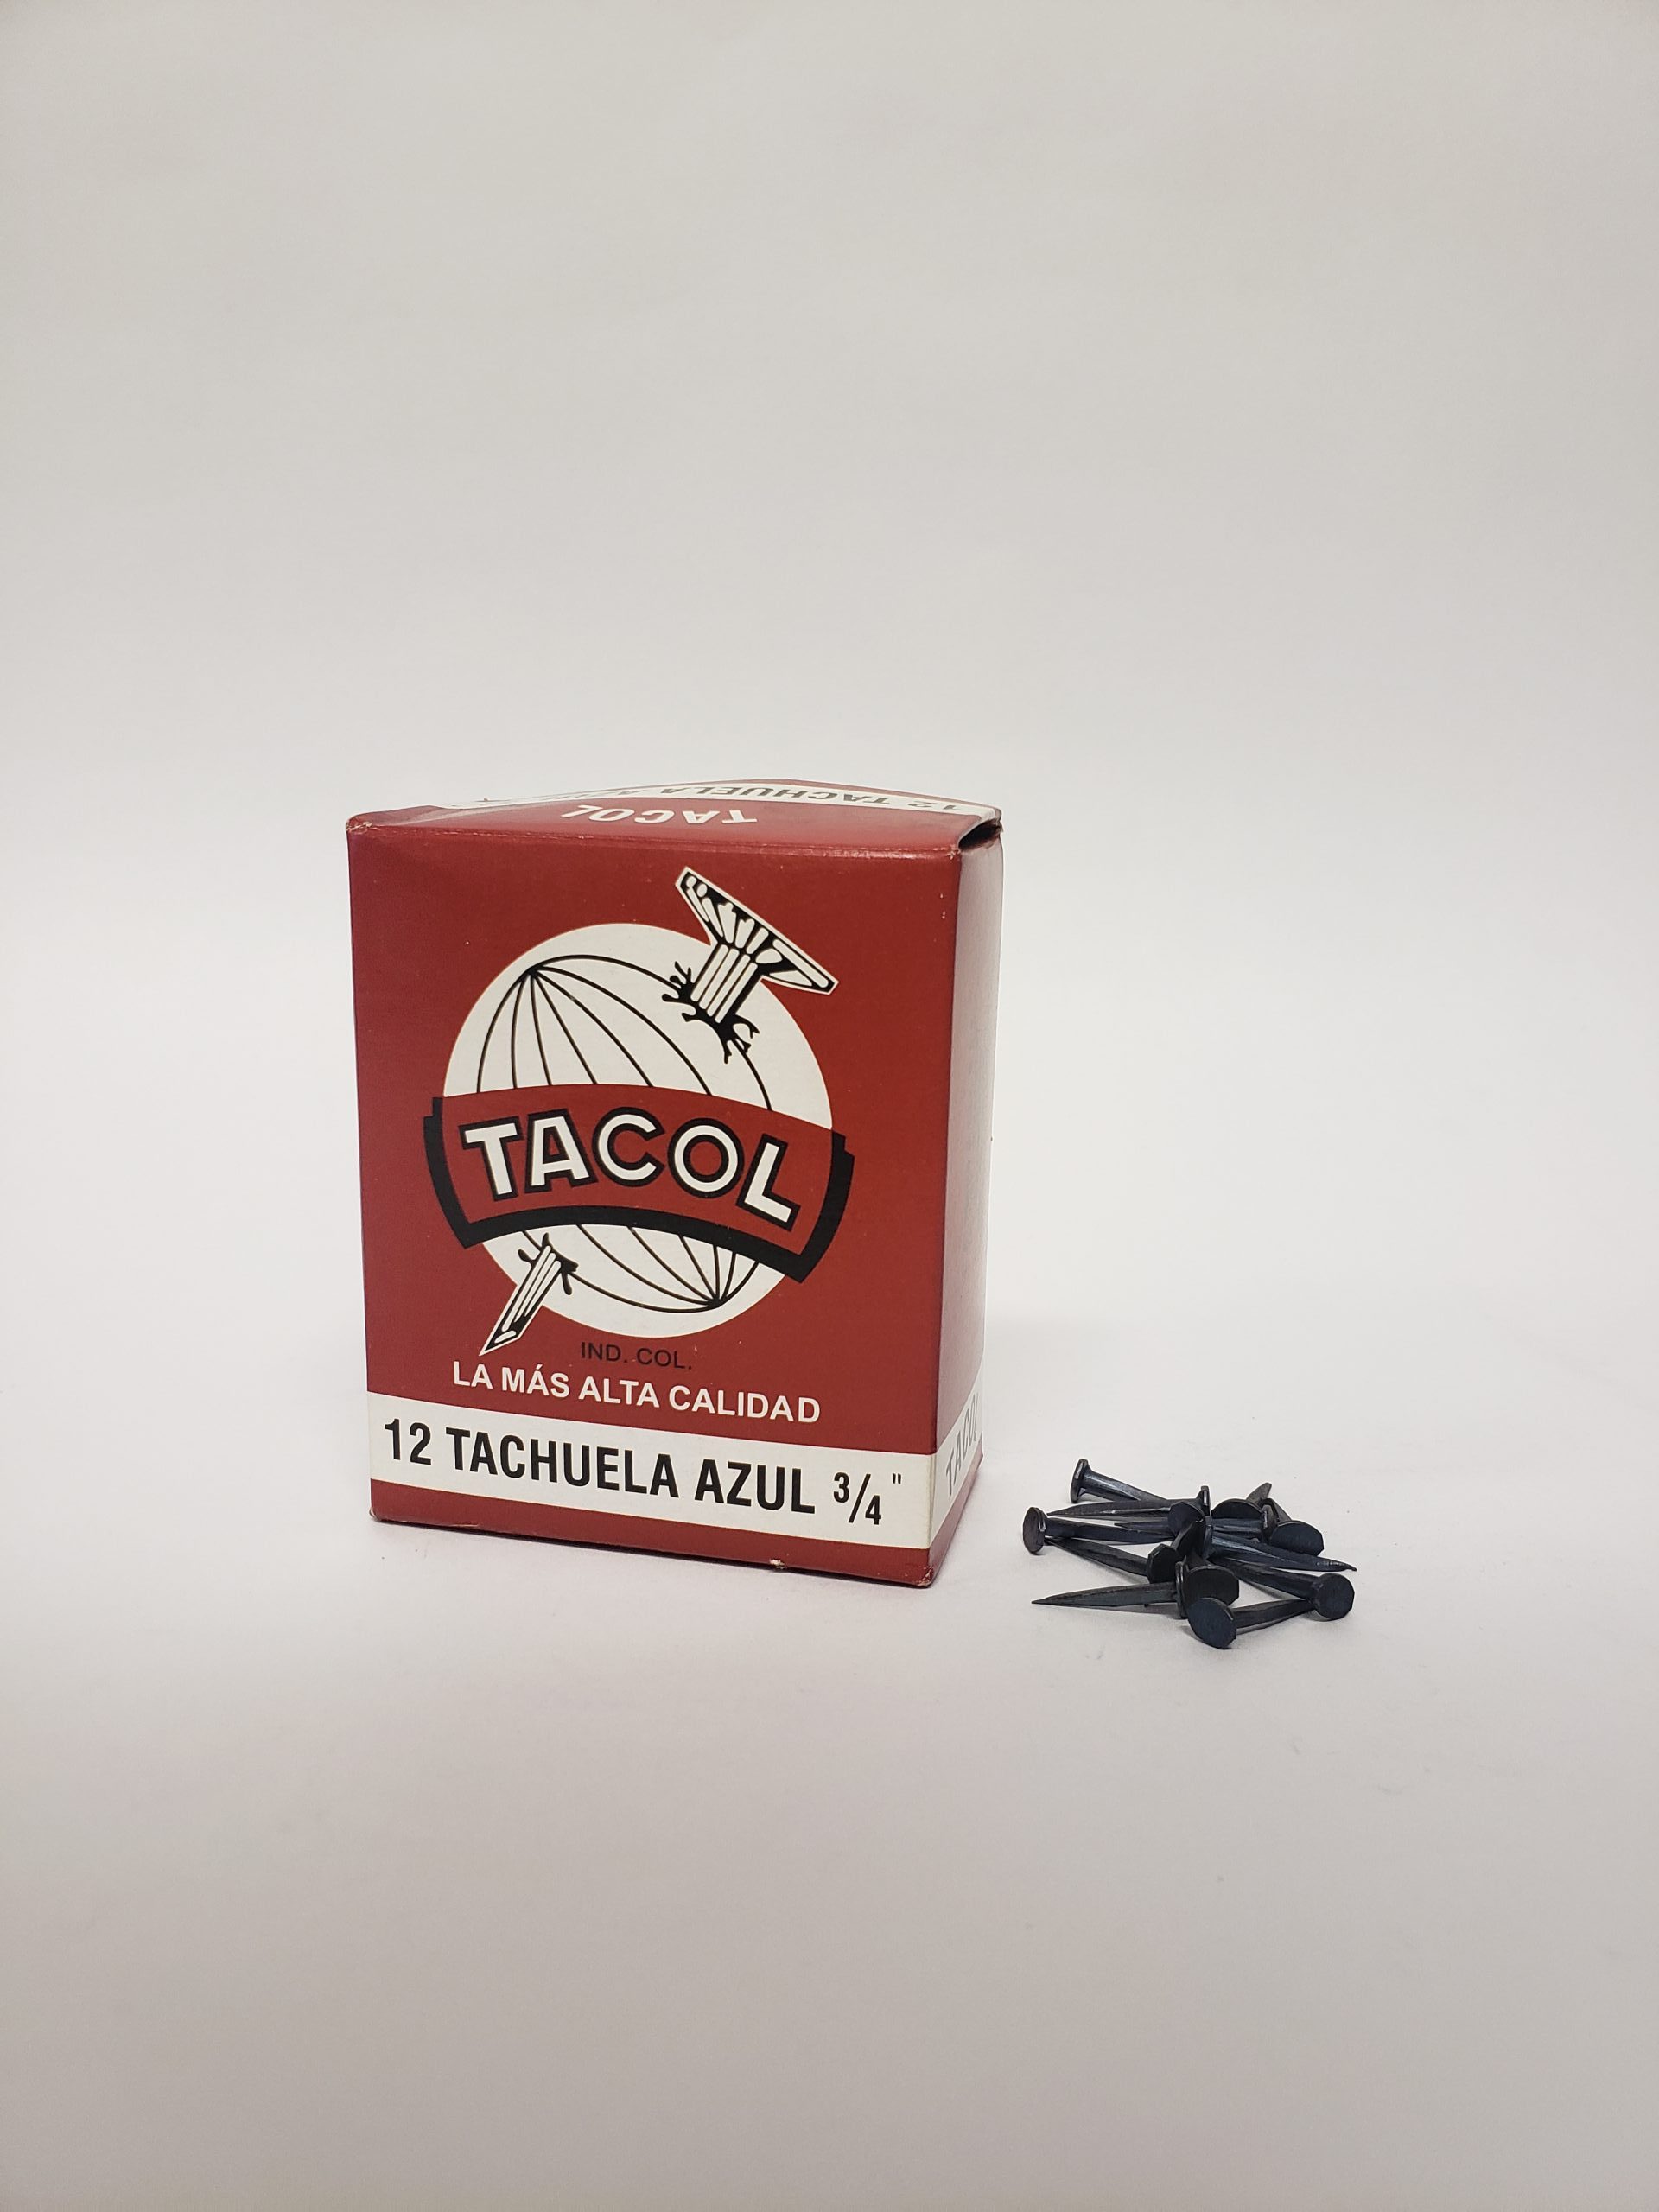 Tachuela-Tacol-12-scaled-e1609945206388.jpg